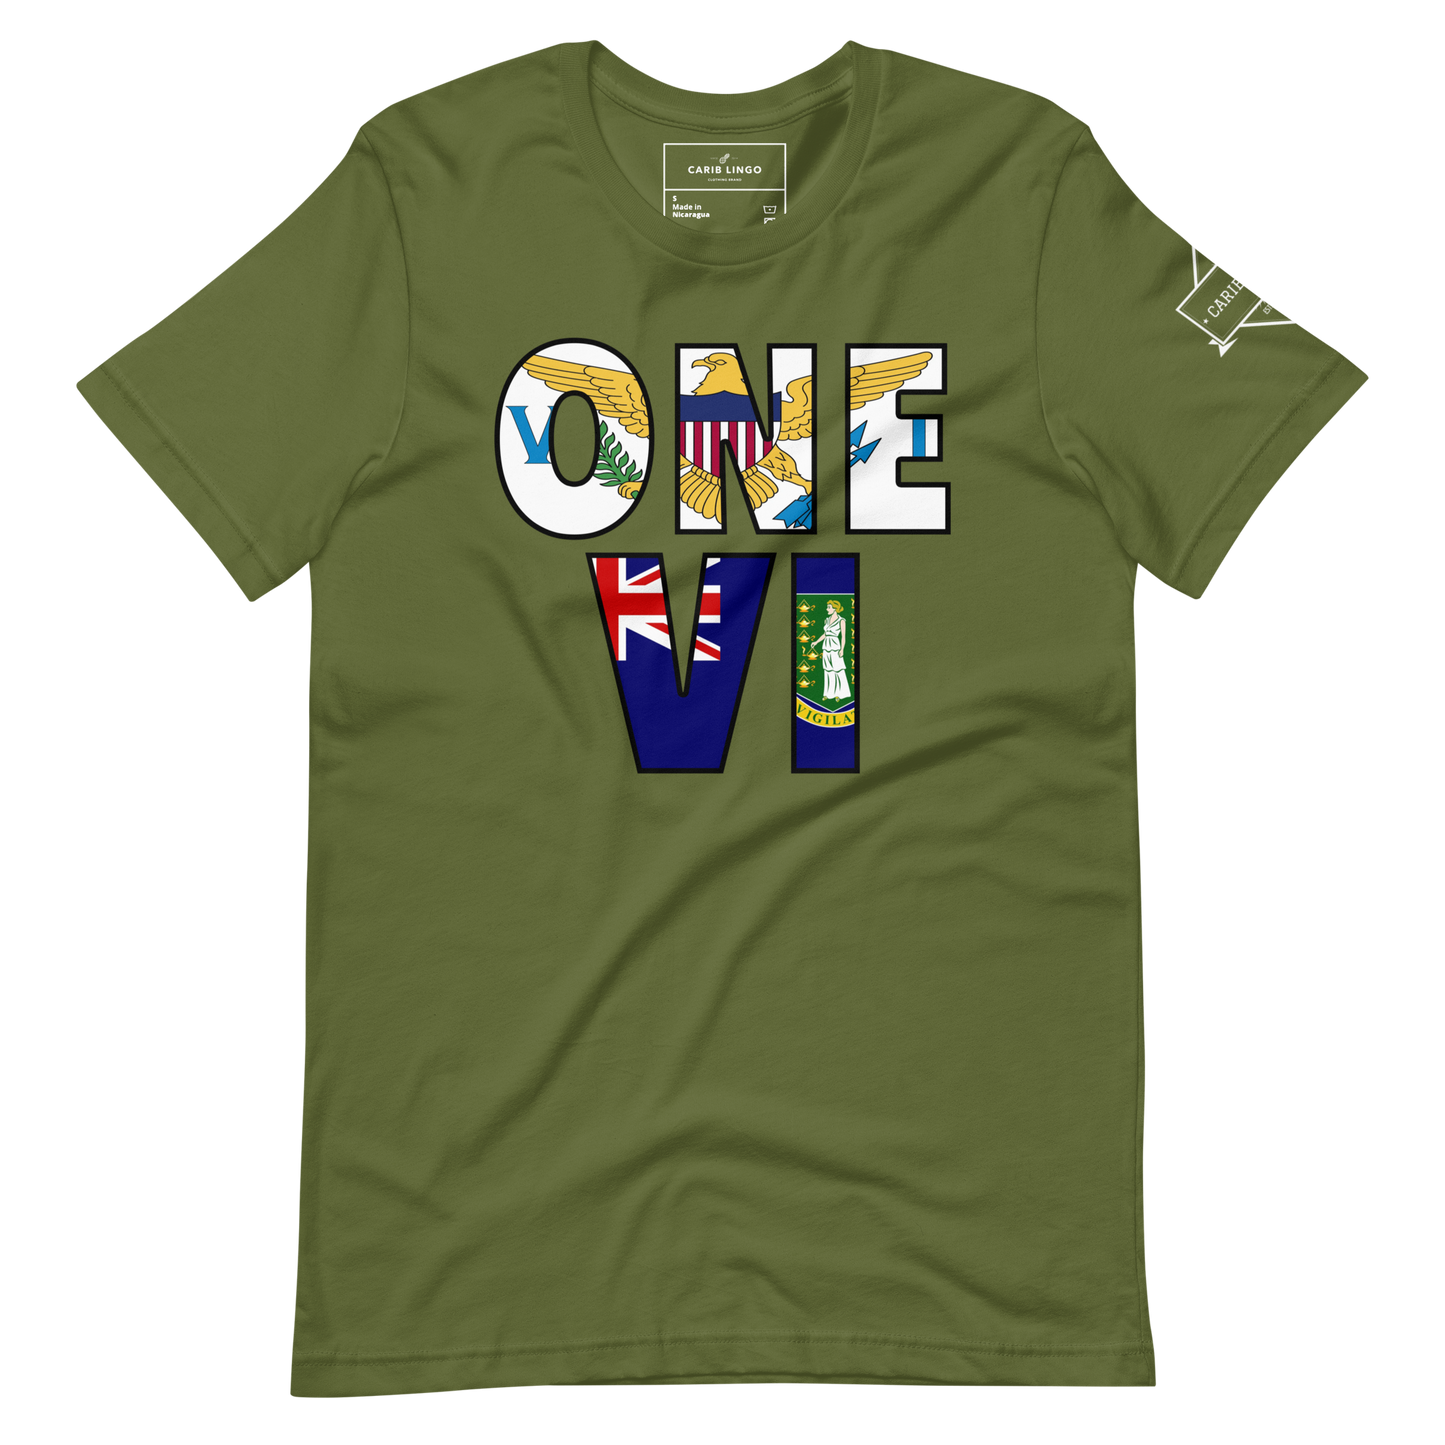 One VI Unisex t-shirt